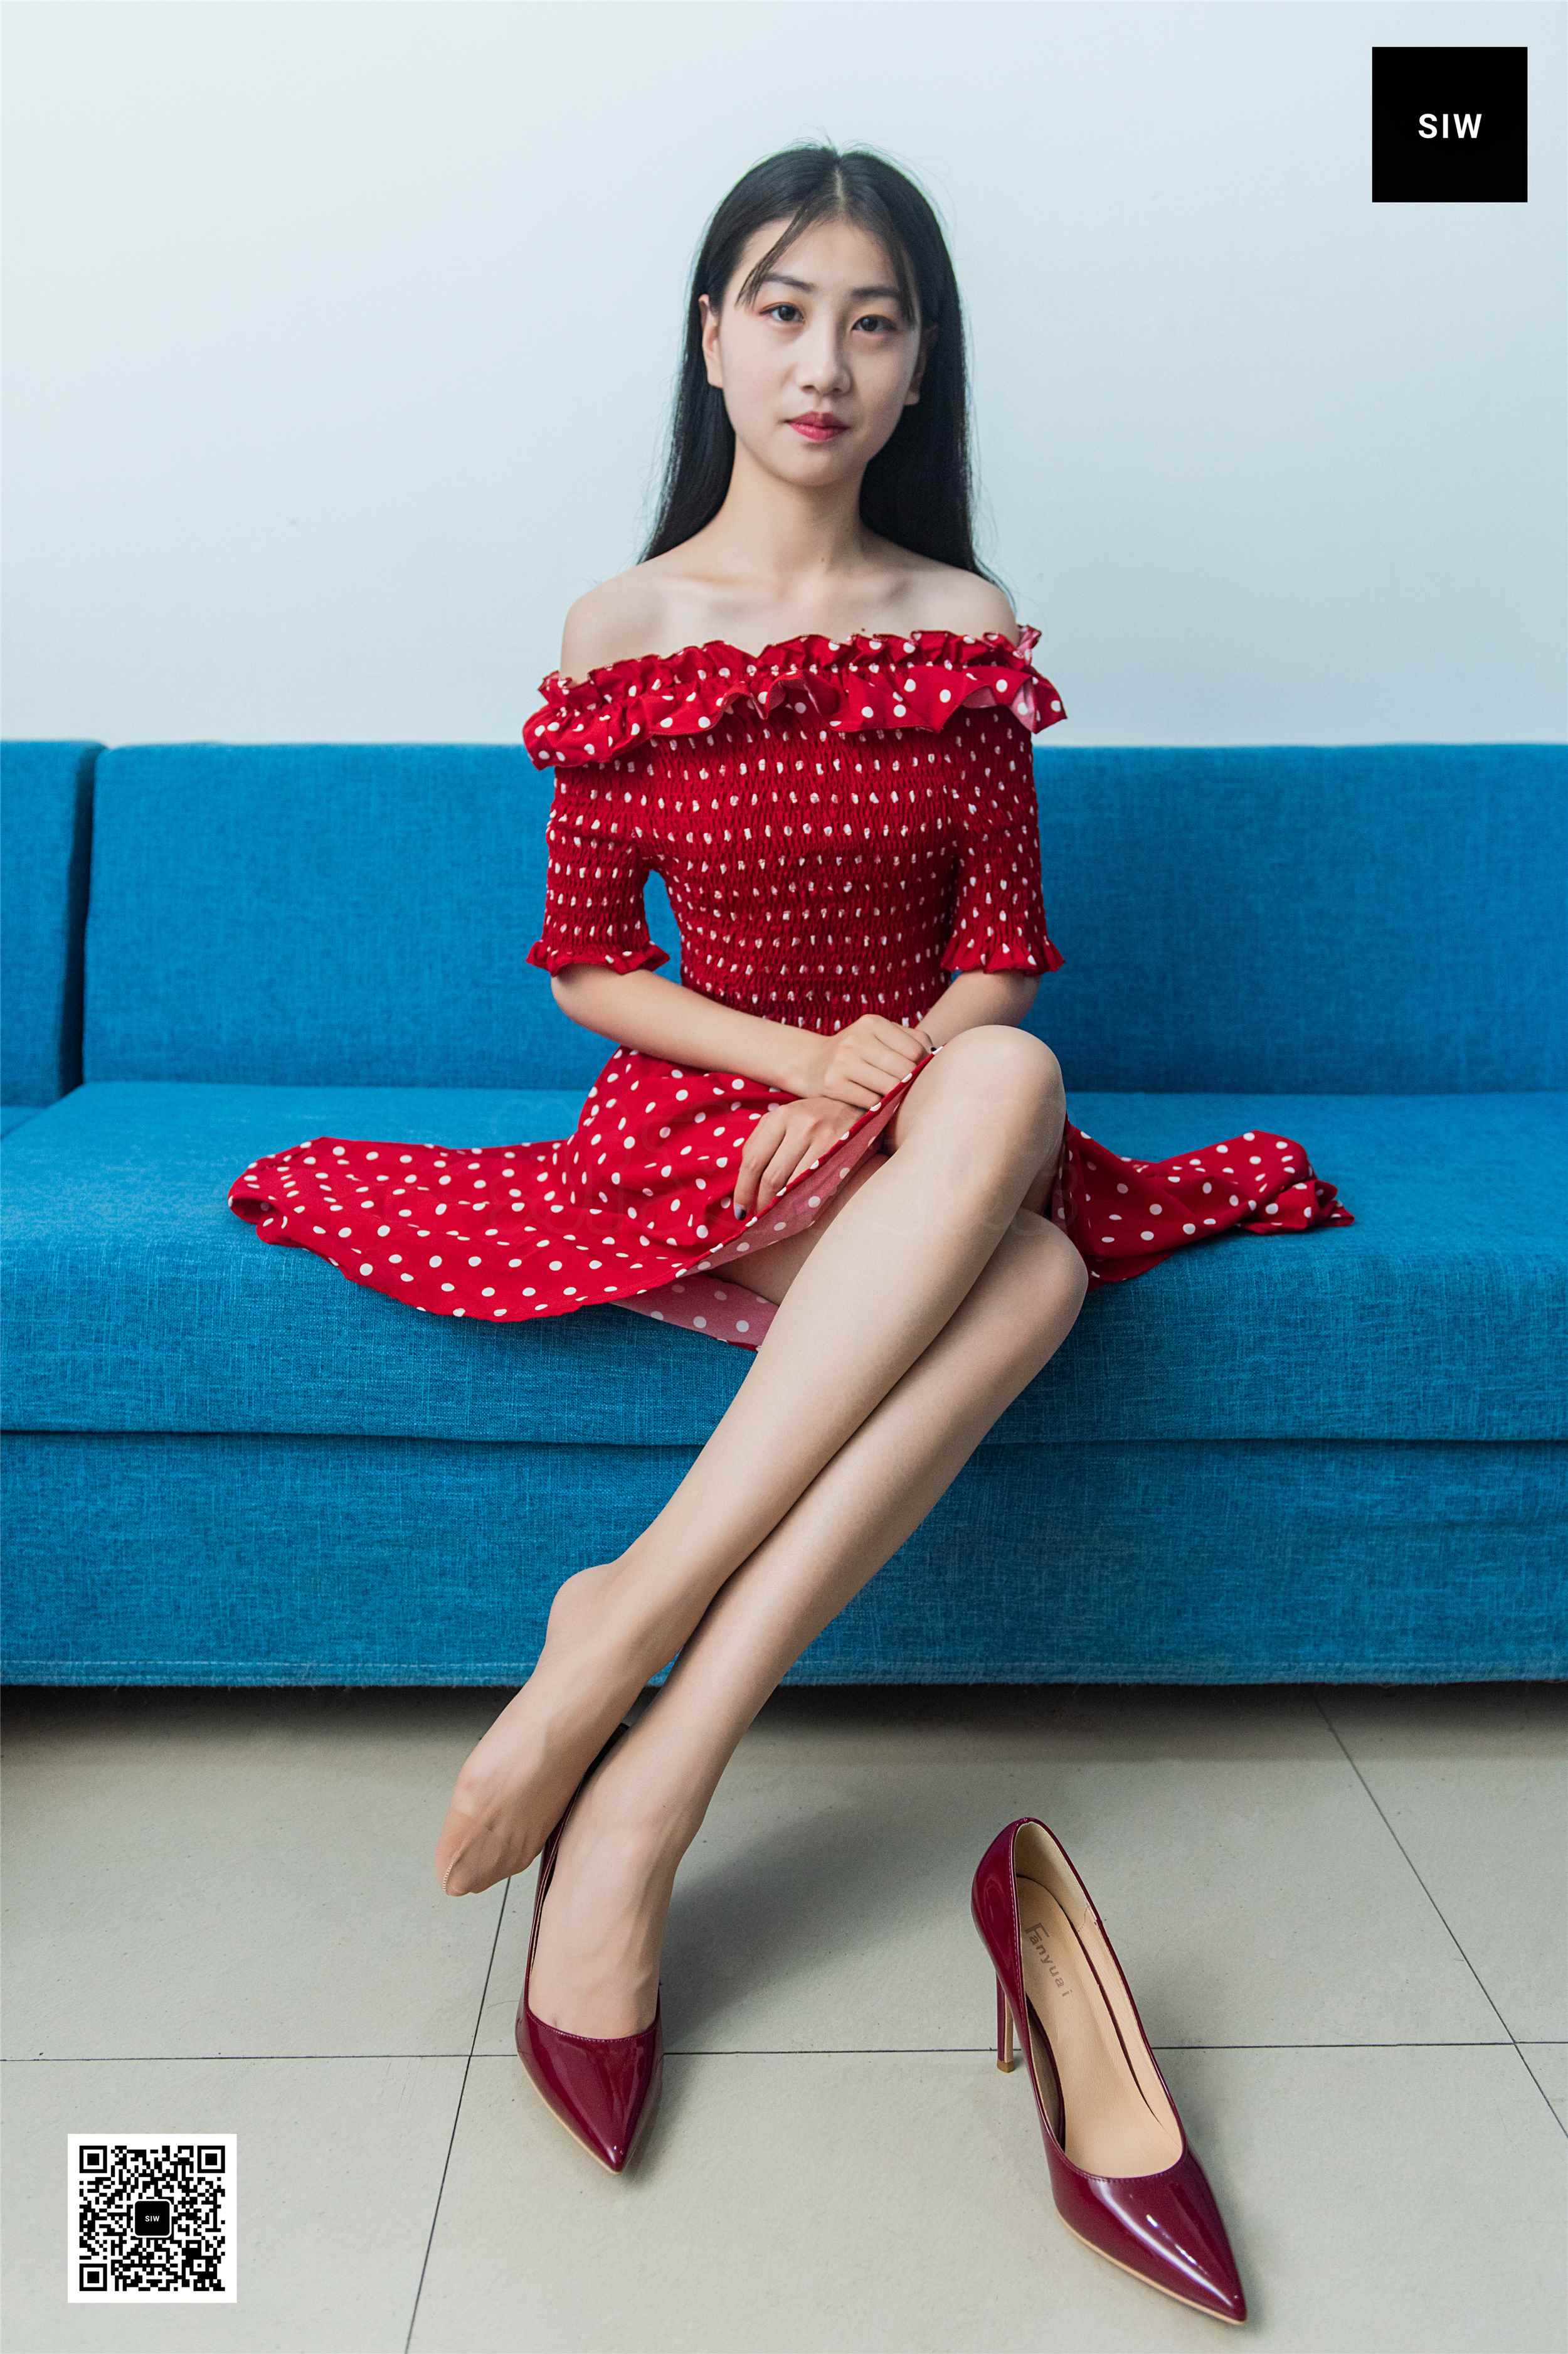 China Beauty Legs and feet 50